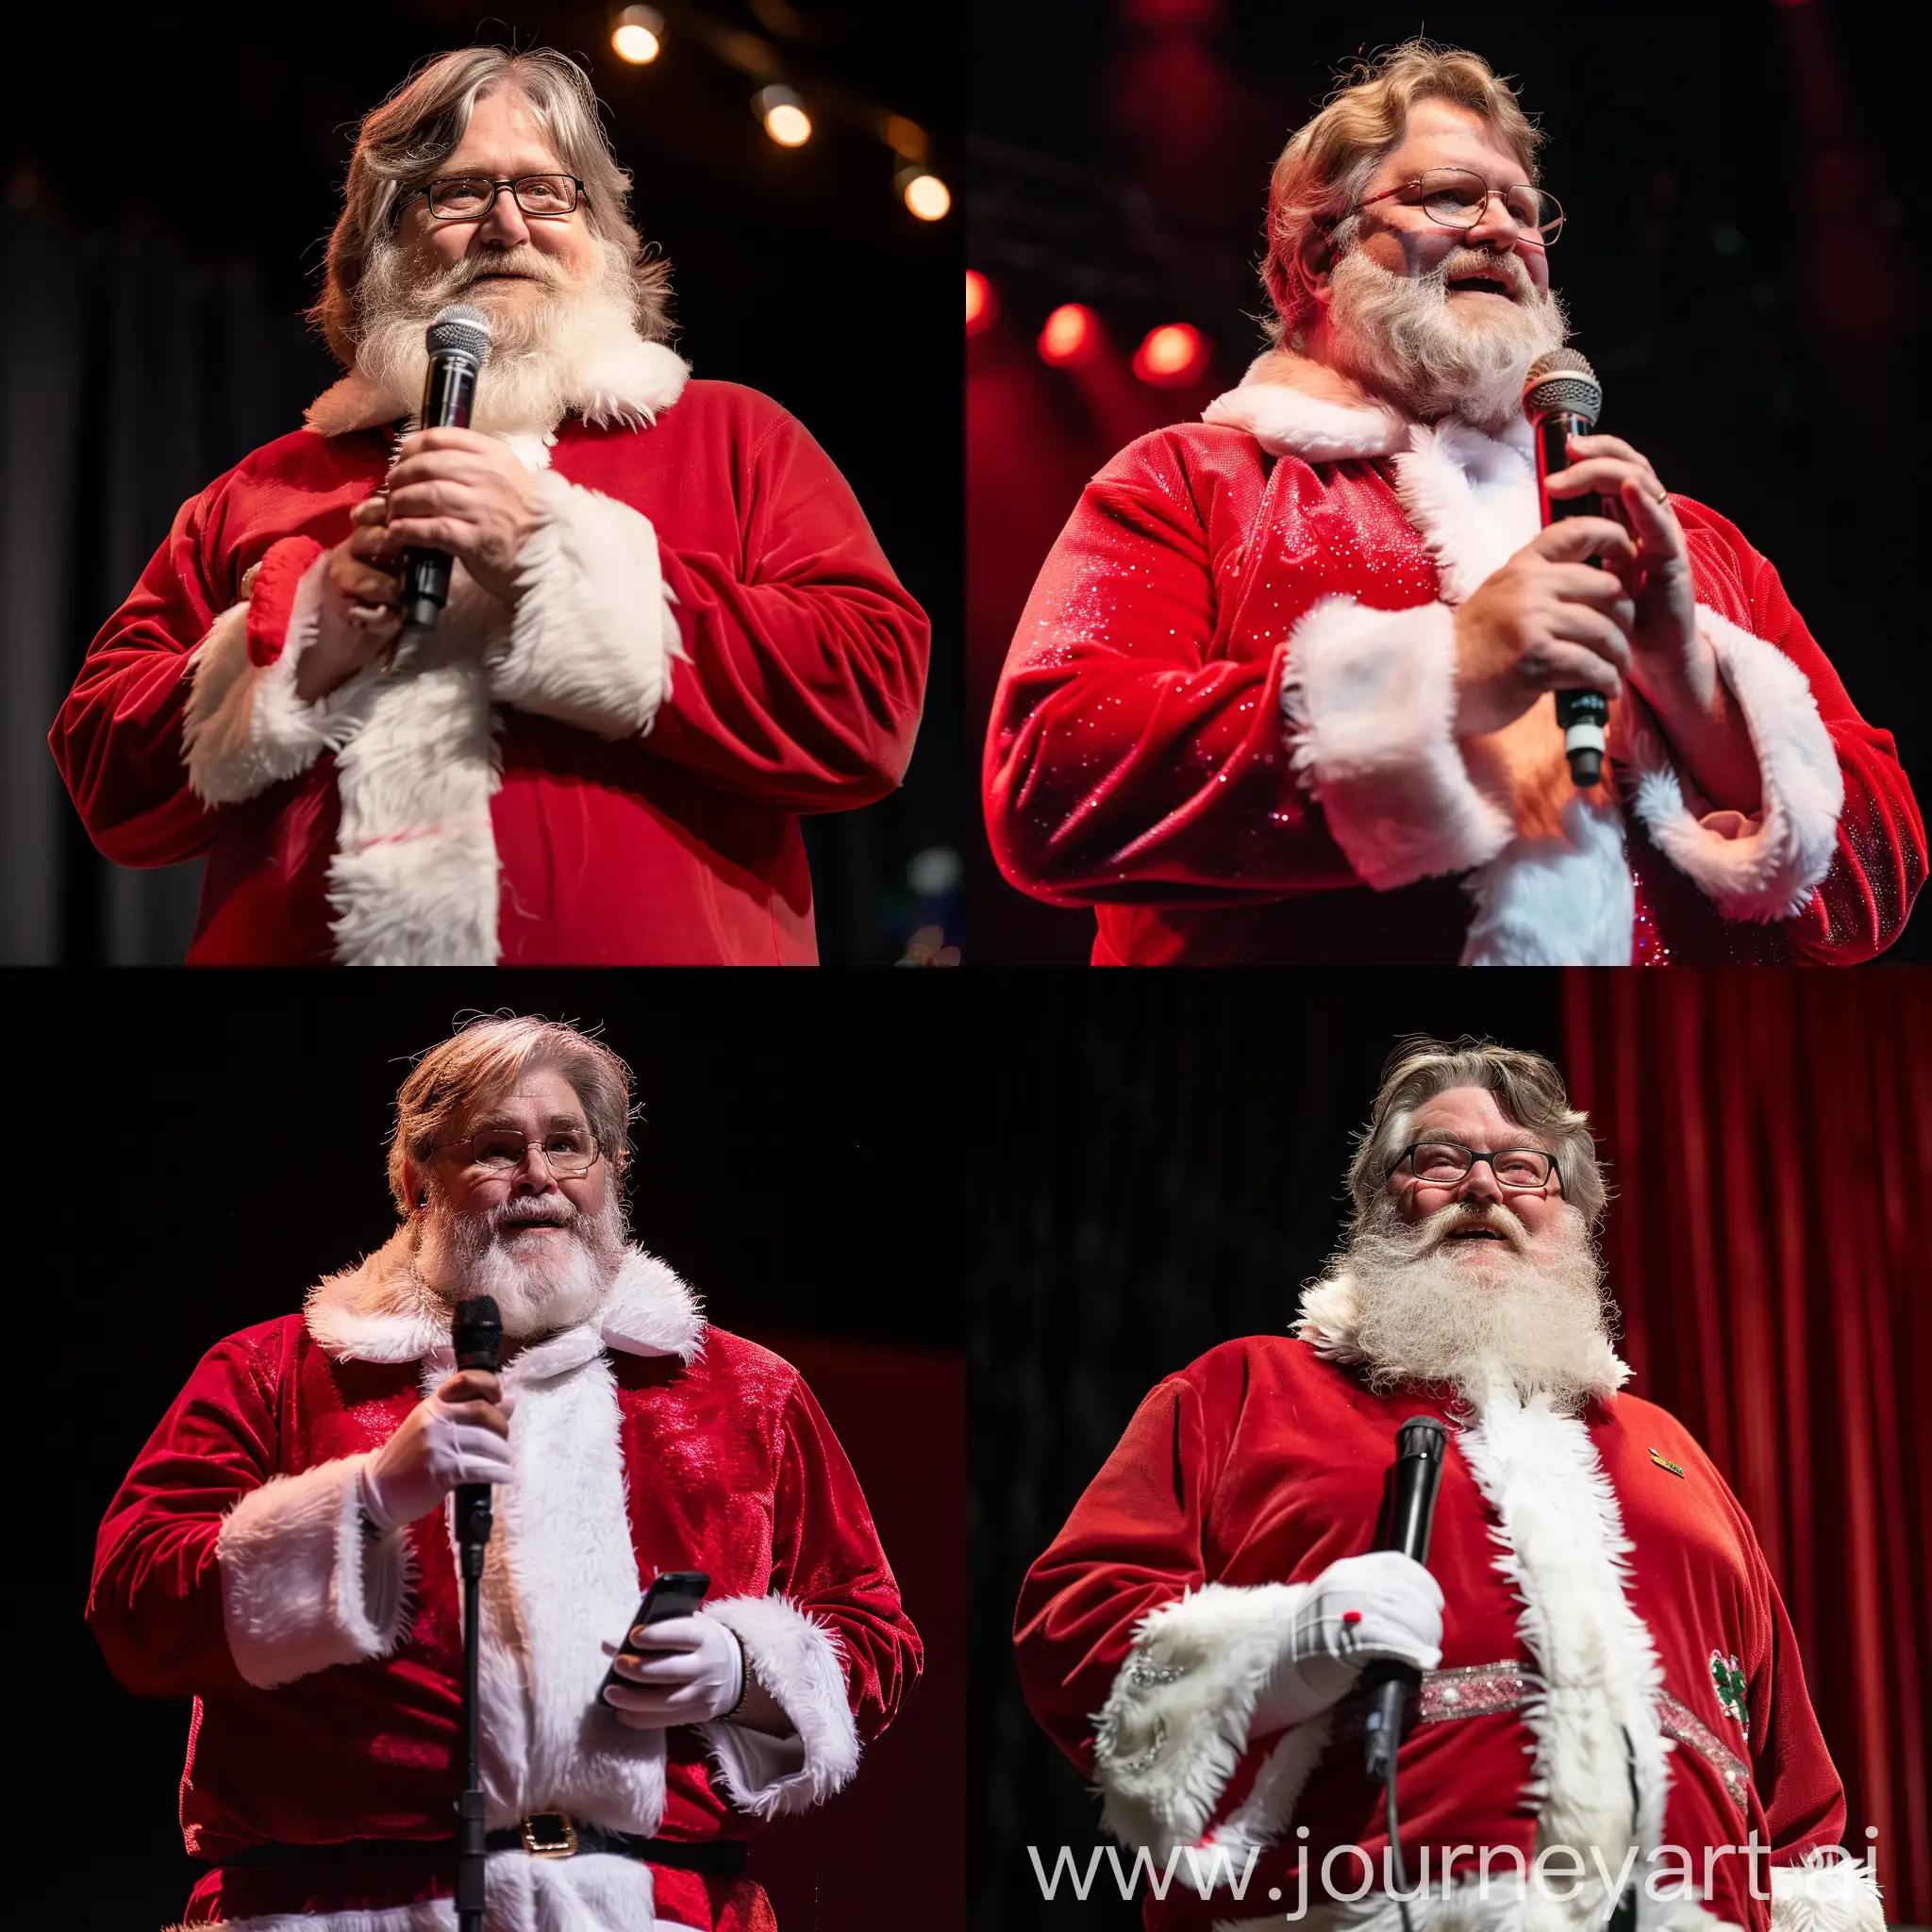 Gabe-Newell-Santa-Claus-Costume-Speech-on-Stage